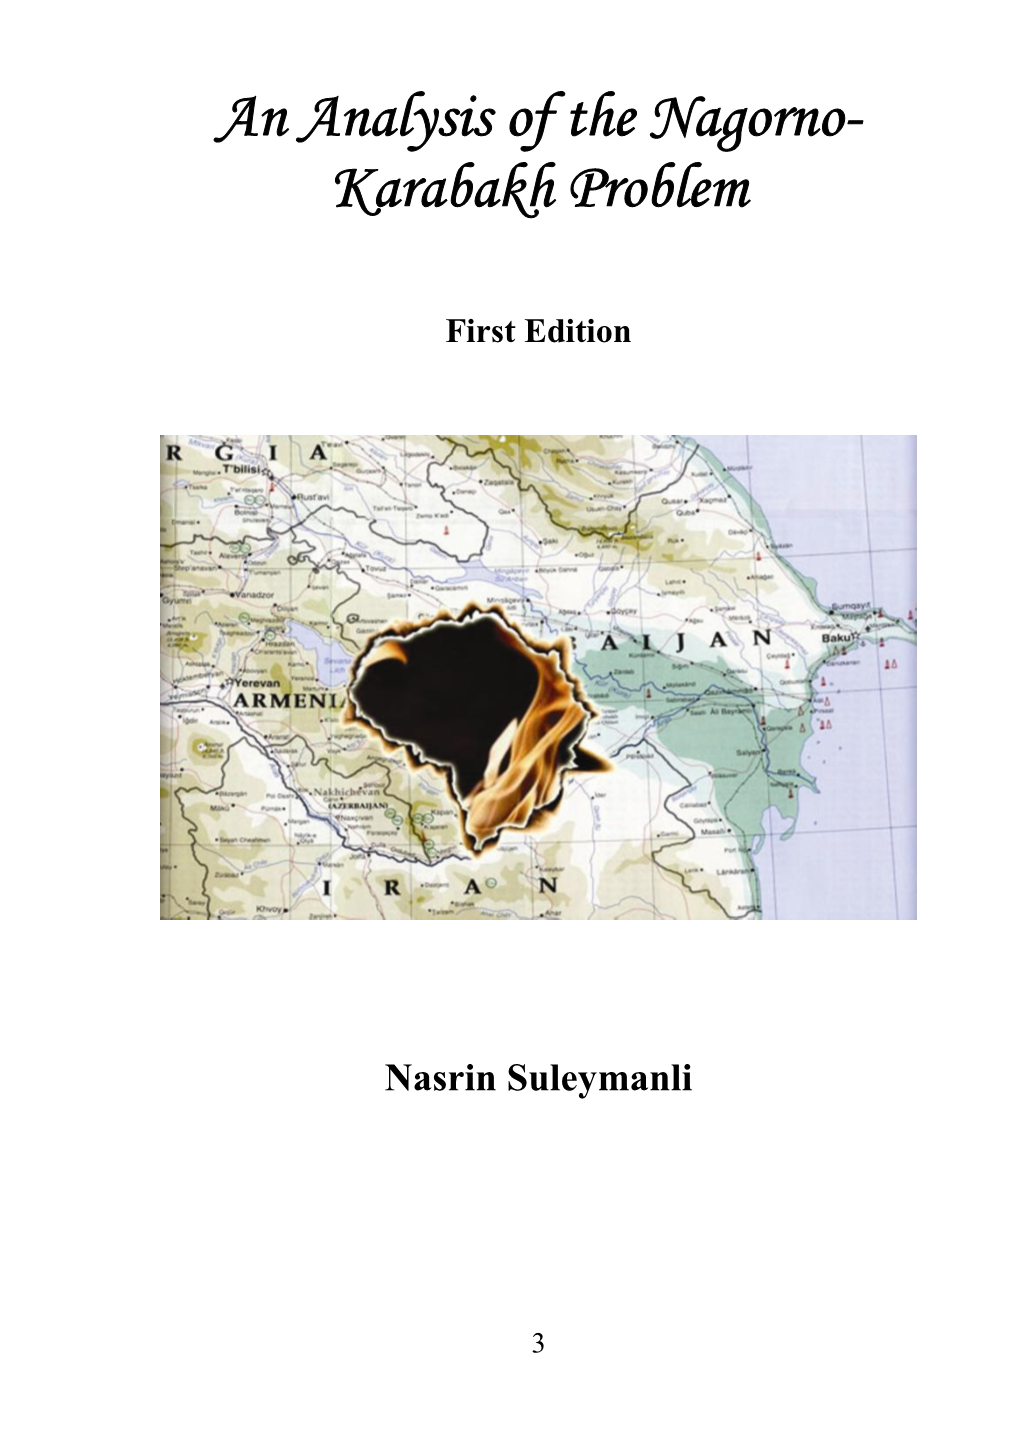 An Analysis of the Nagorno- Karabakh Problem